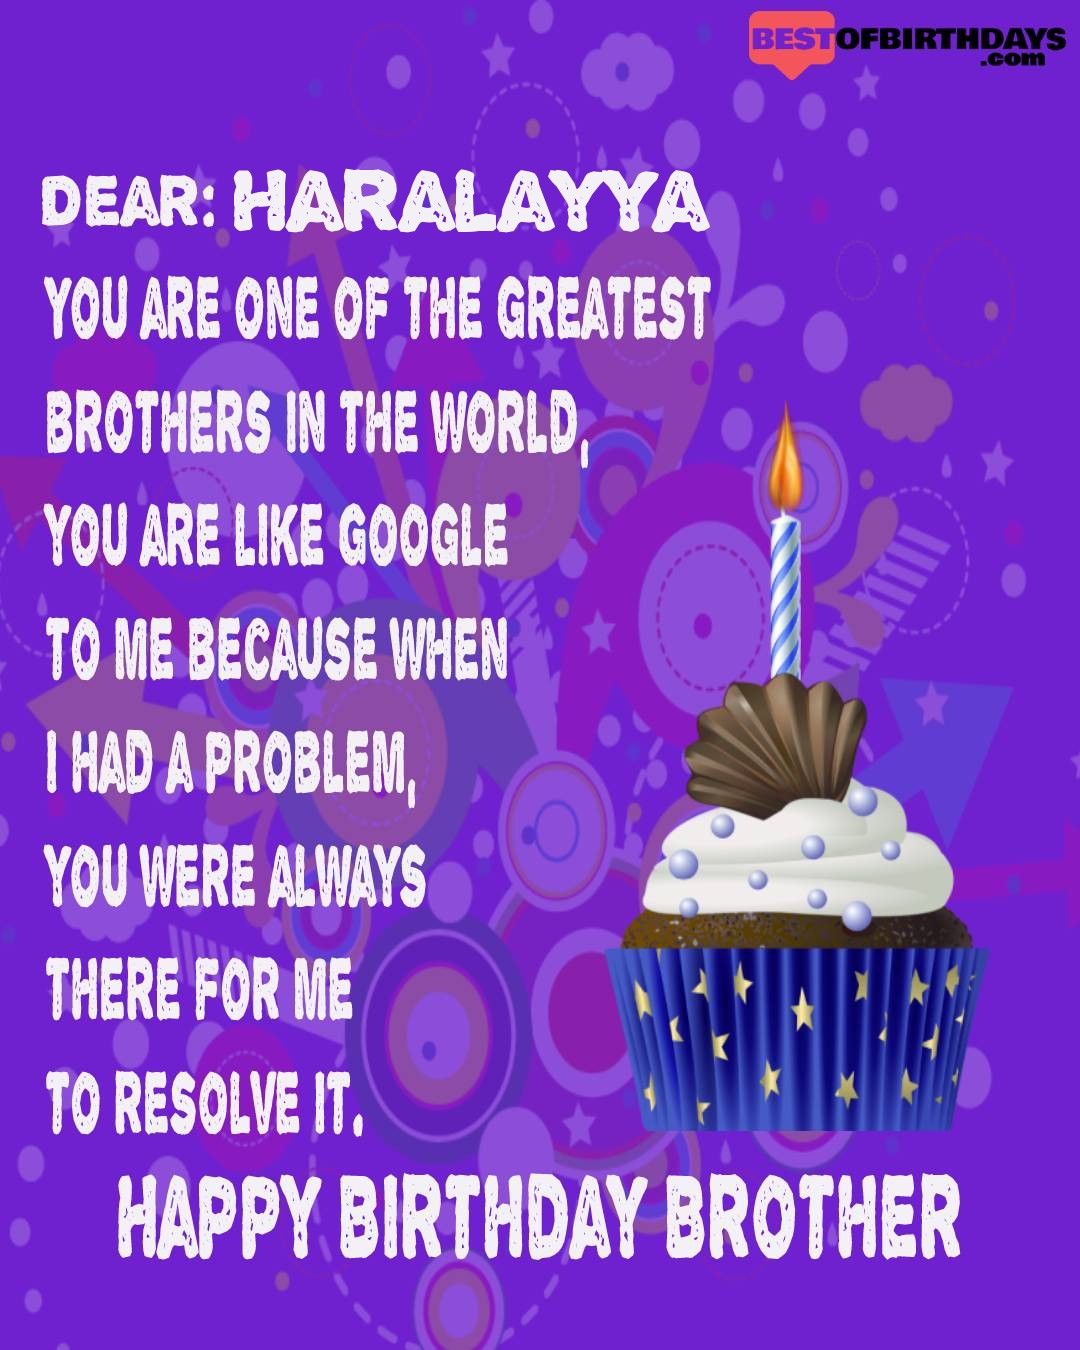 Happy birthday haralayya bhai brother bro